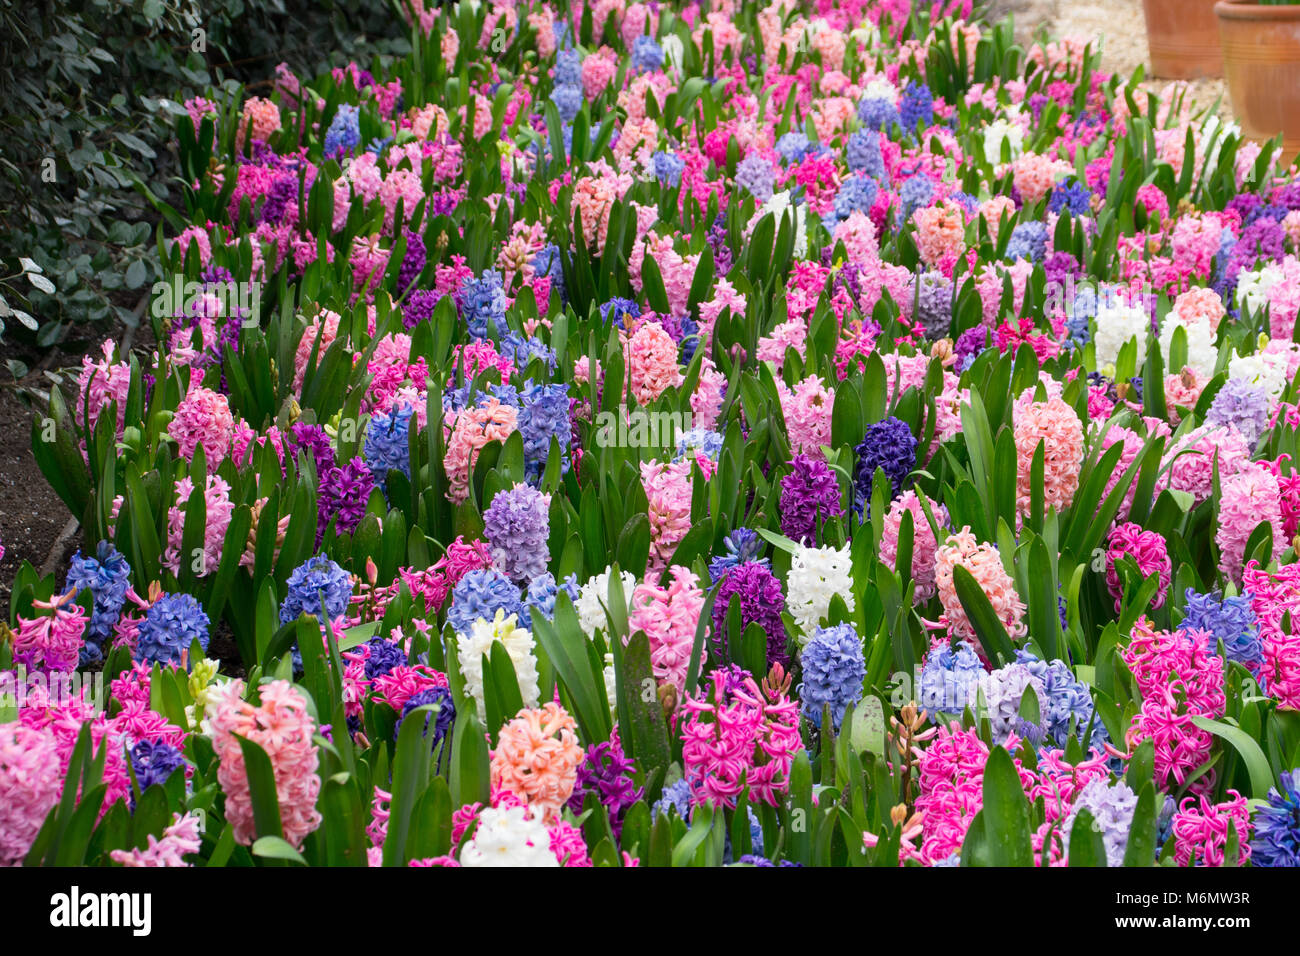 Mass planting of Hyacinth flowers Stock Photo